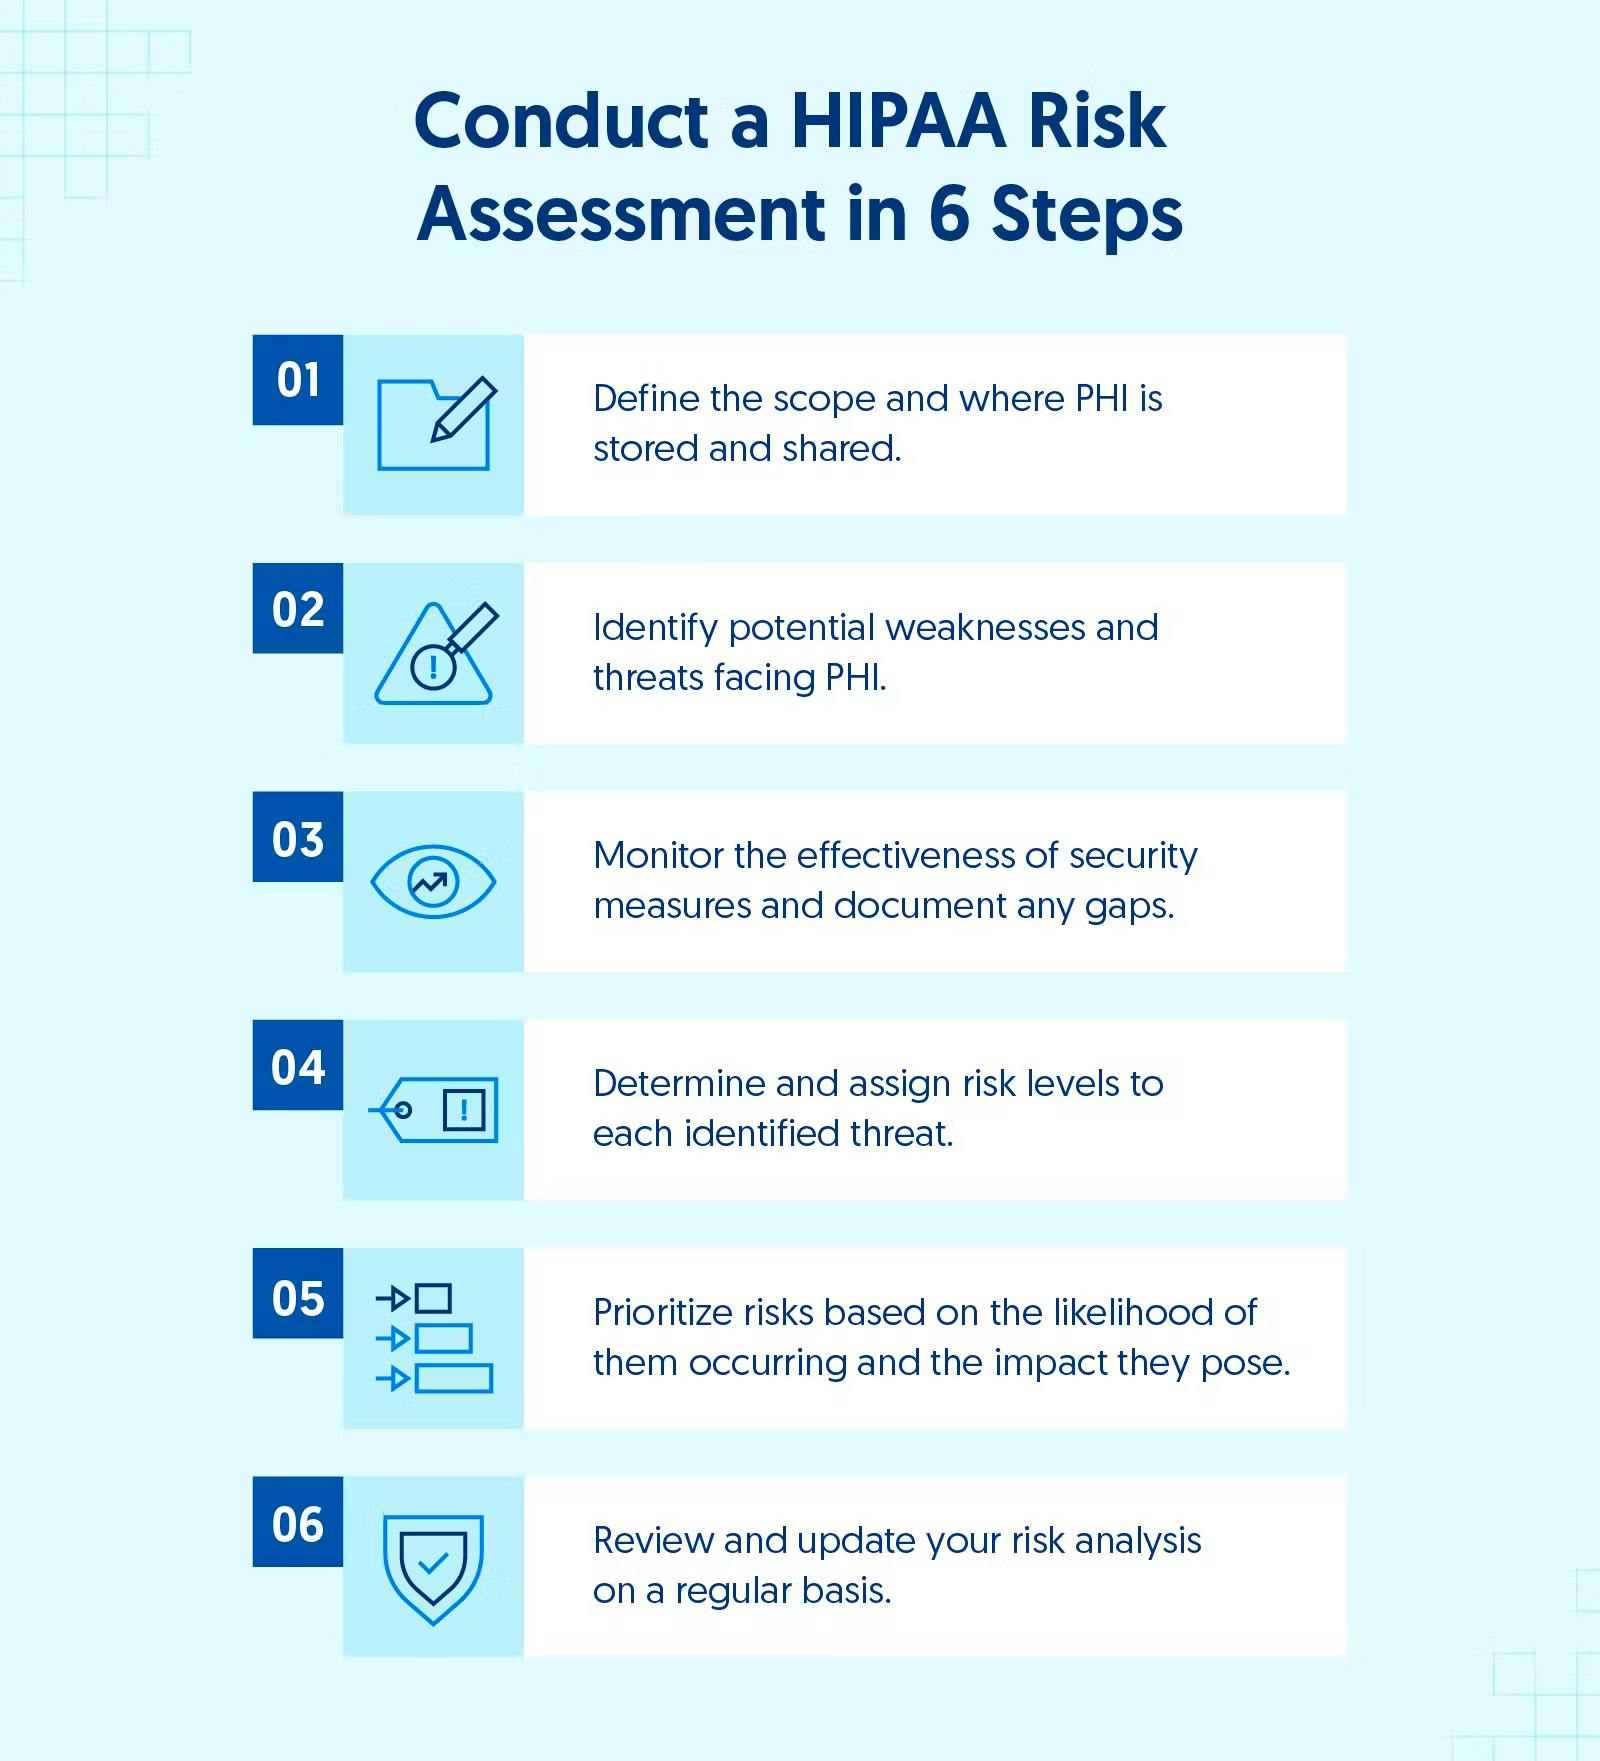 HIPAA risk assessment process broken down into six steps